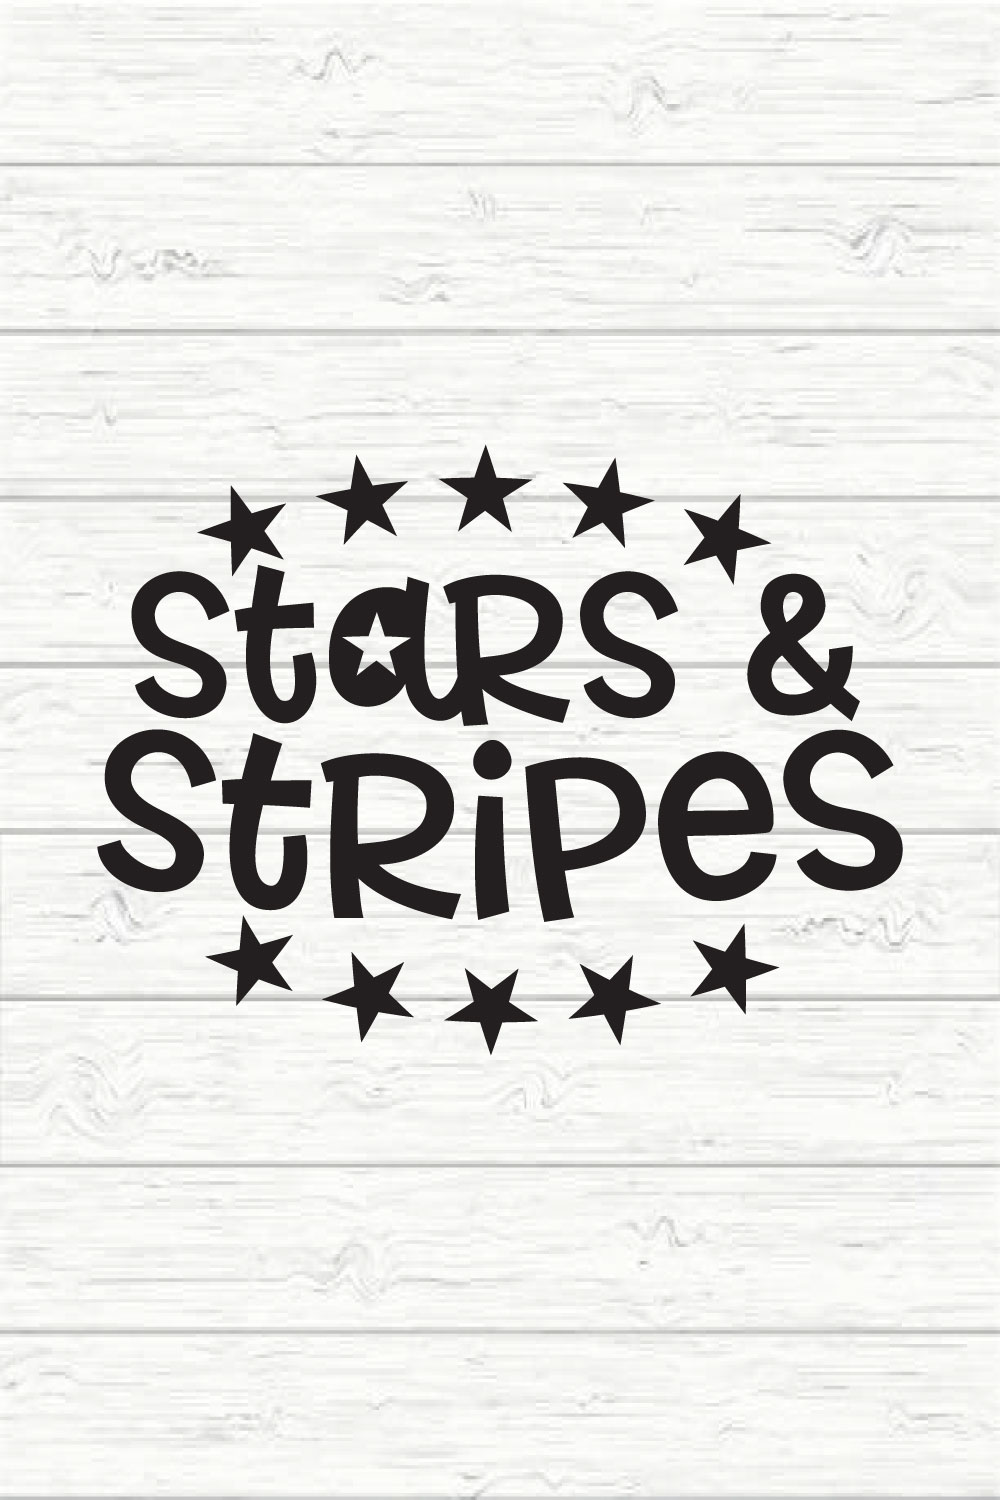 Stars & Stripes pinterest preview image.